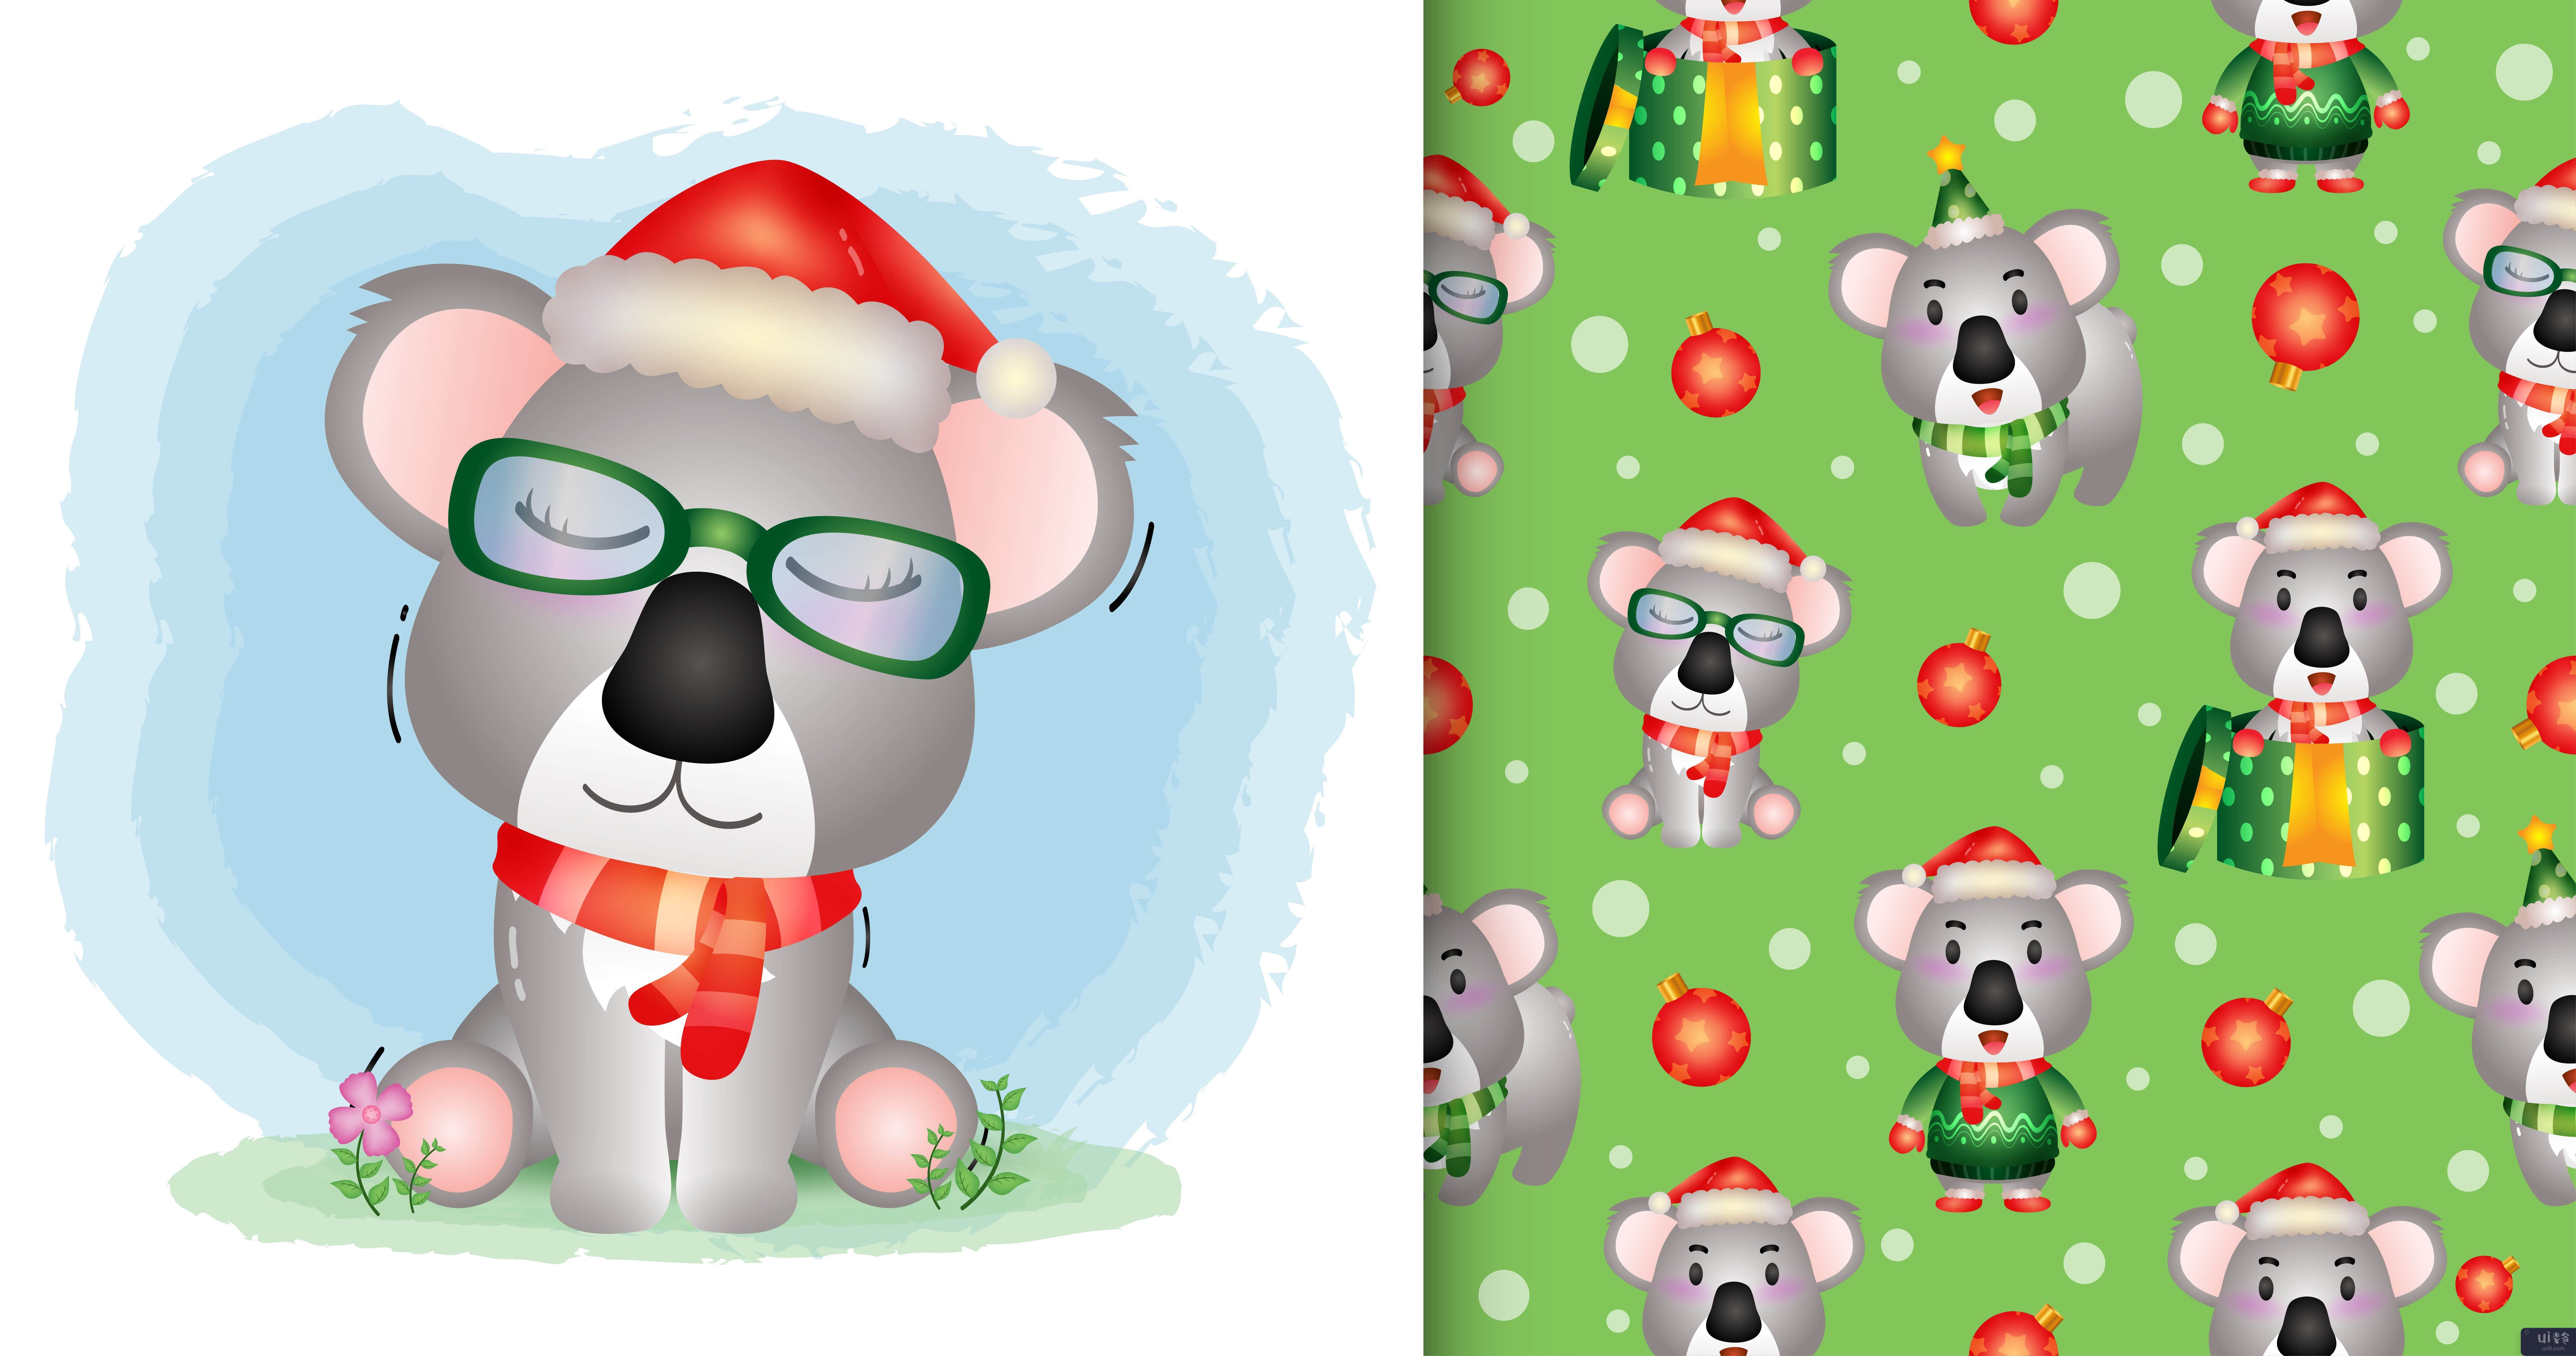 可爱的考拉圣诞人物。无缝图案和插图设计(a cute koala christmas characters. seamless pattern and illustration designs)插图2